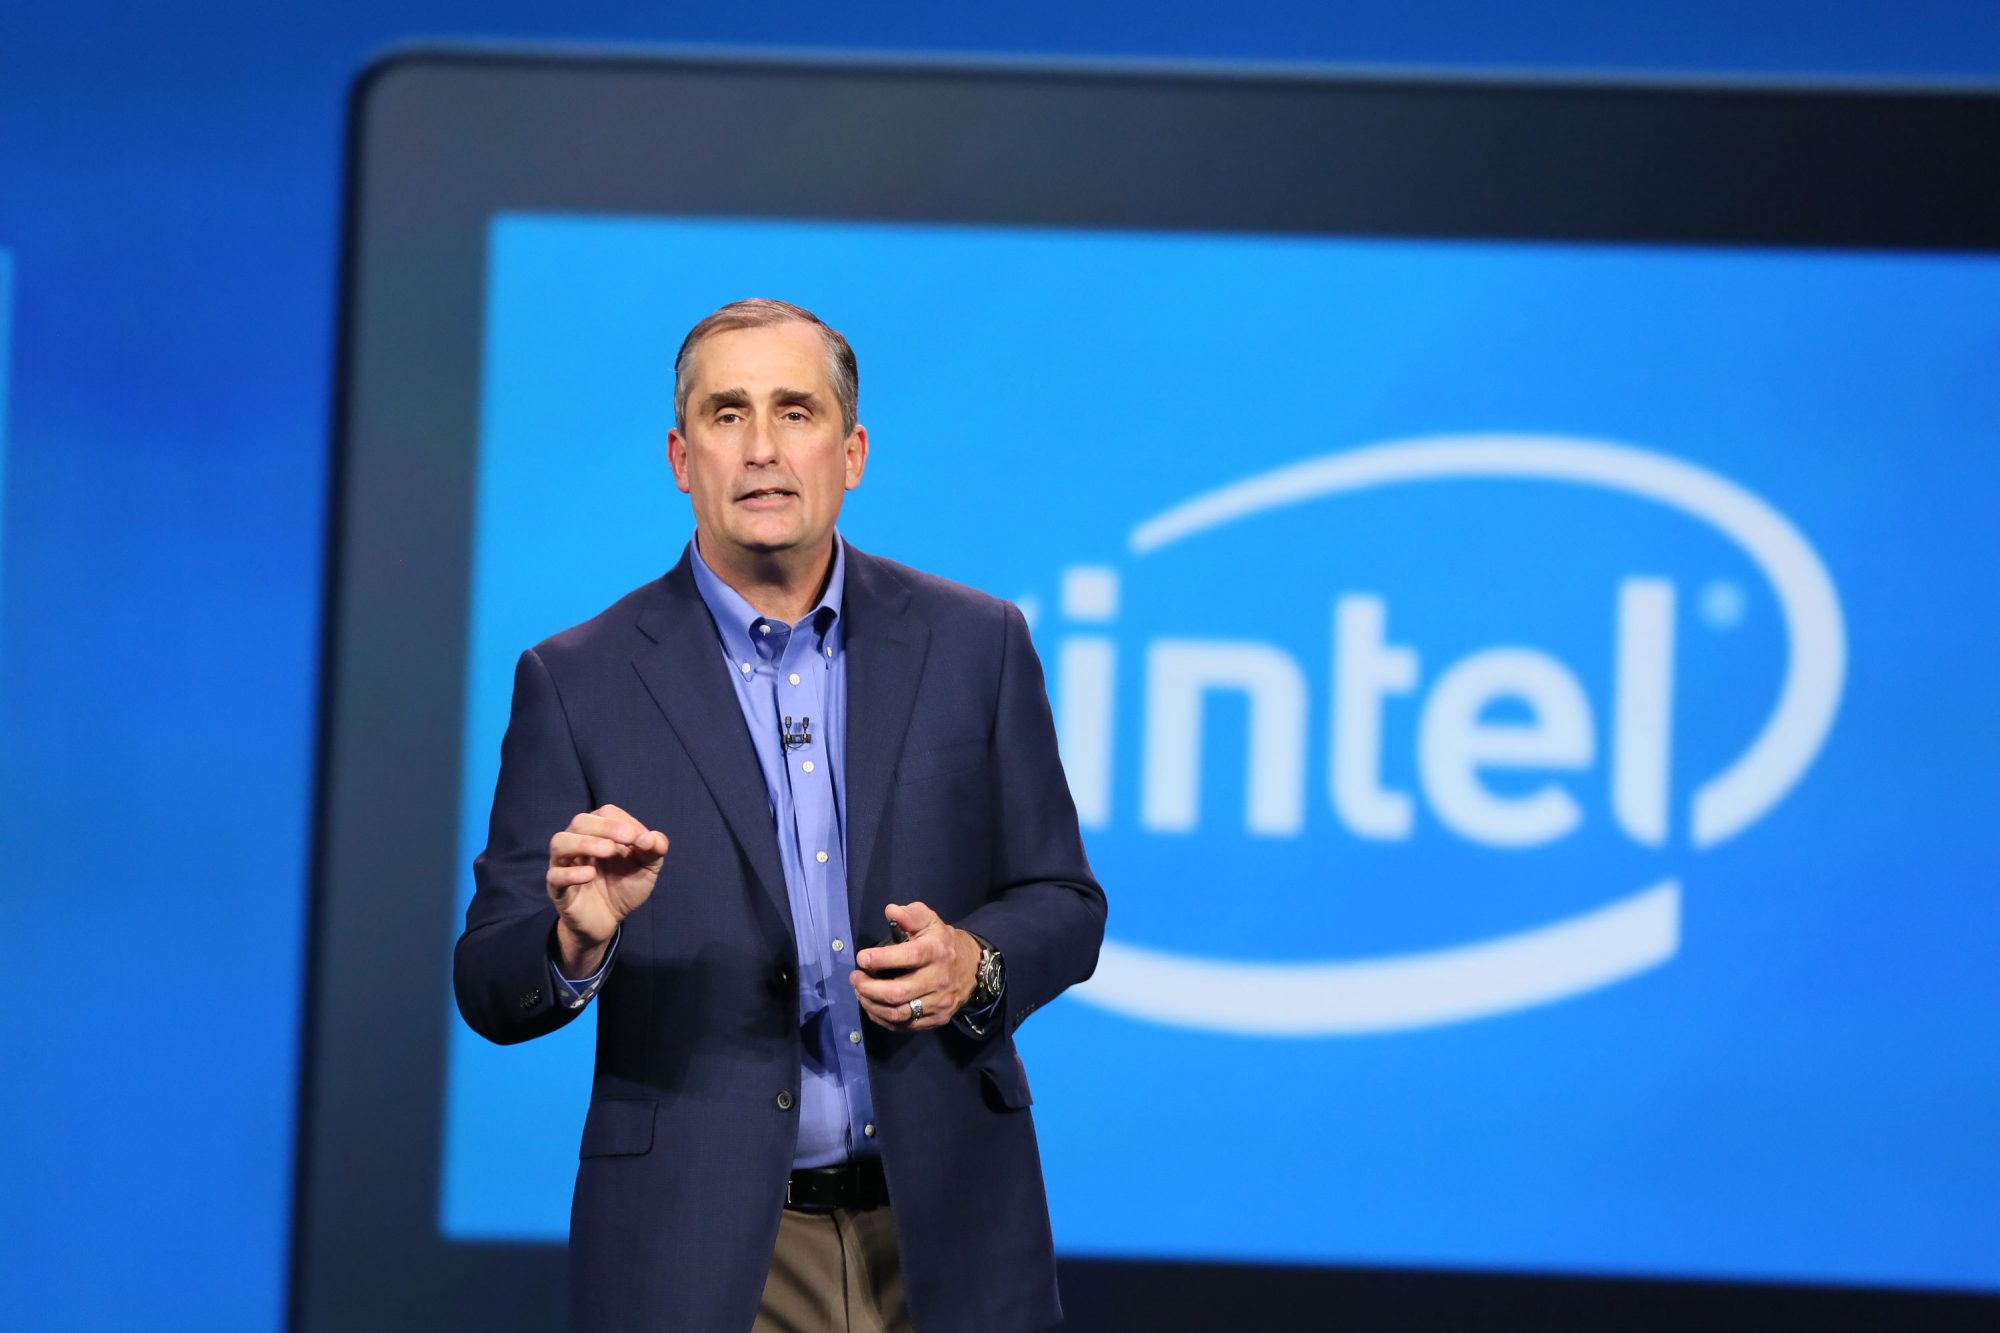 Intel CEO Brian Krzanich onstage at CES 2015